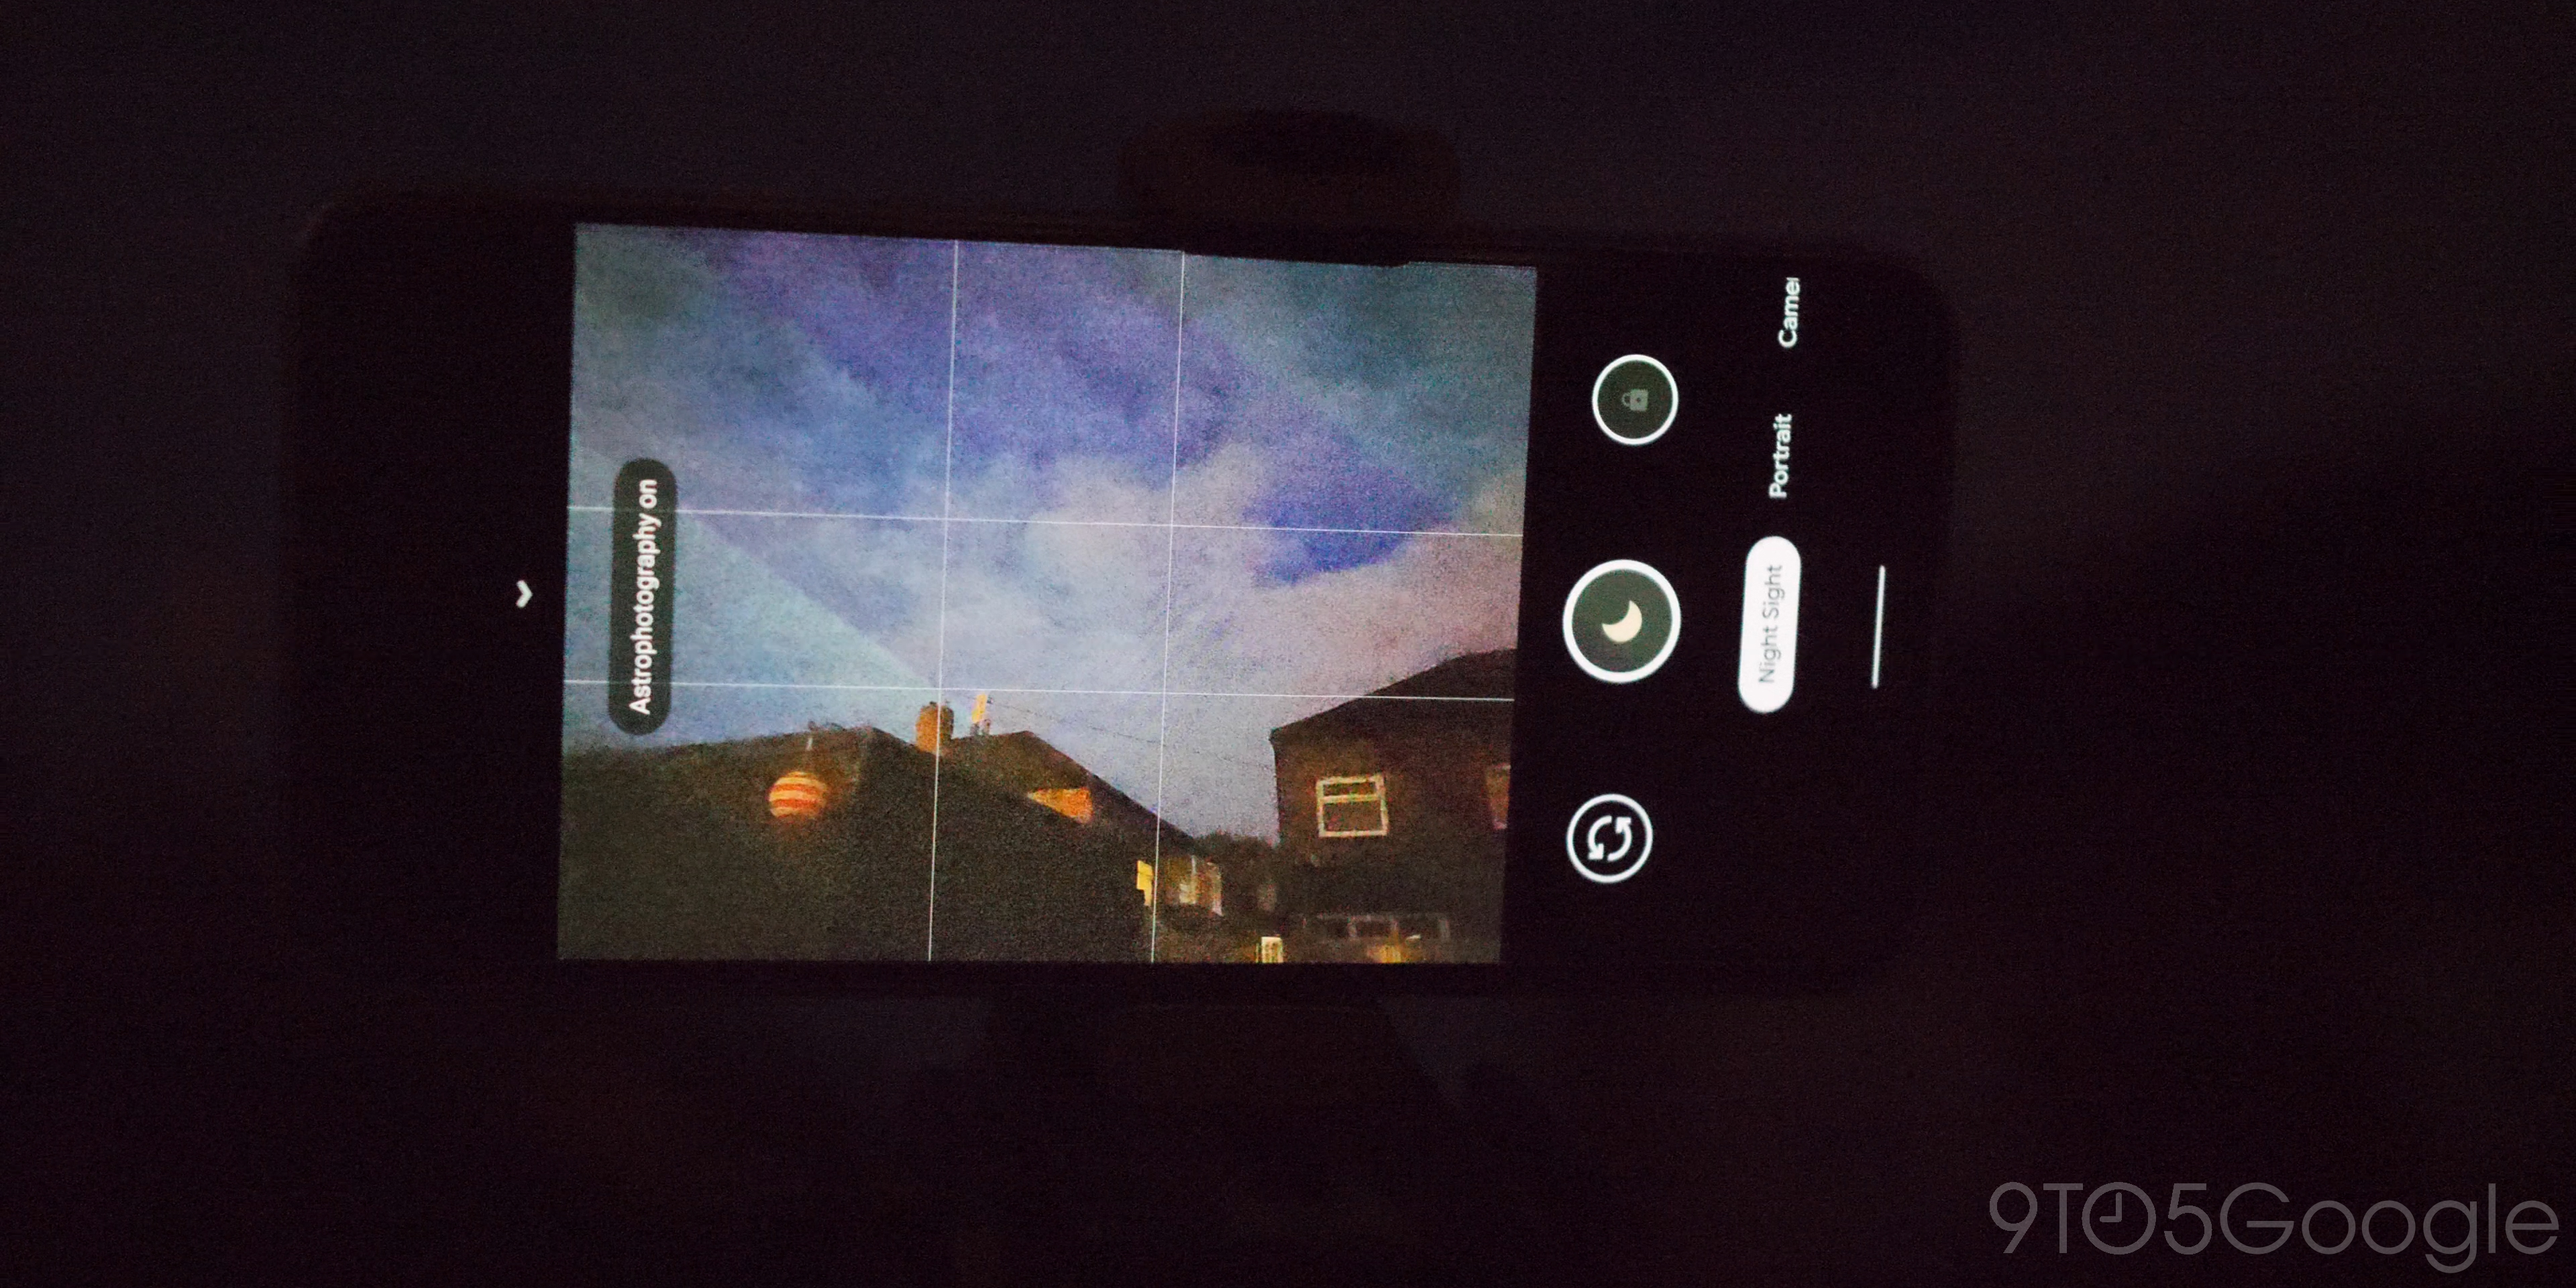 Гугл Камера На Redmi Note 9 S